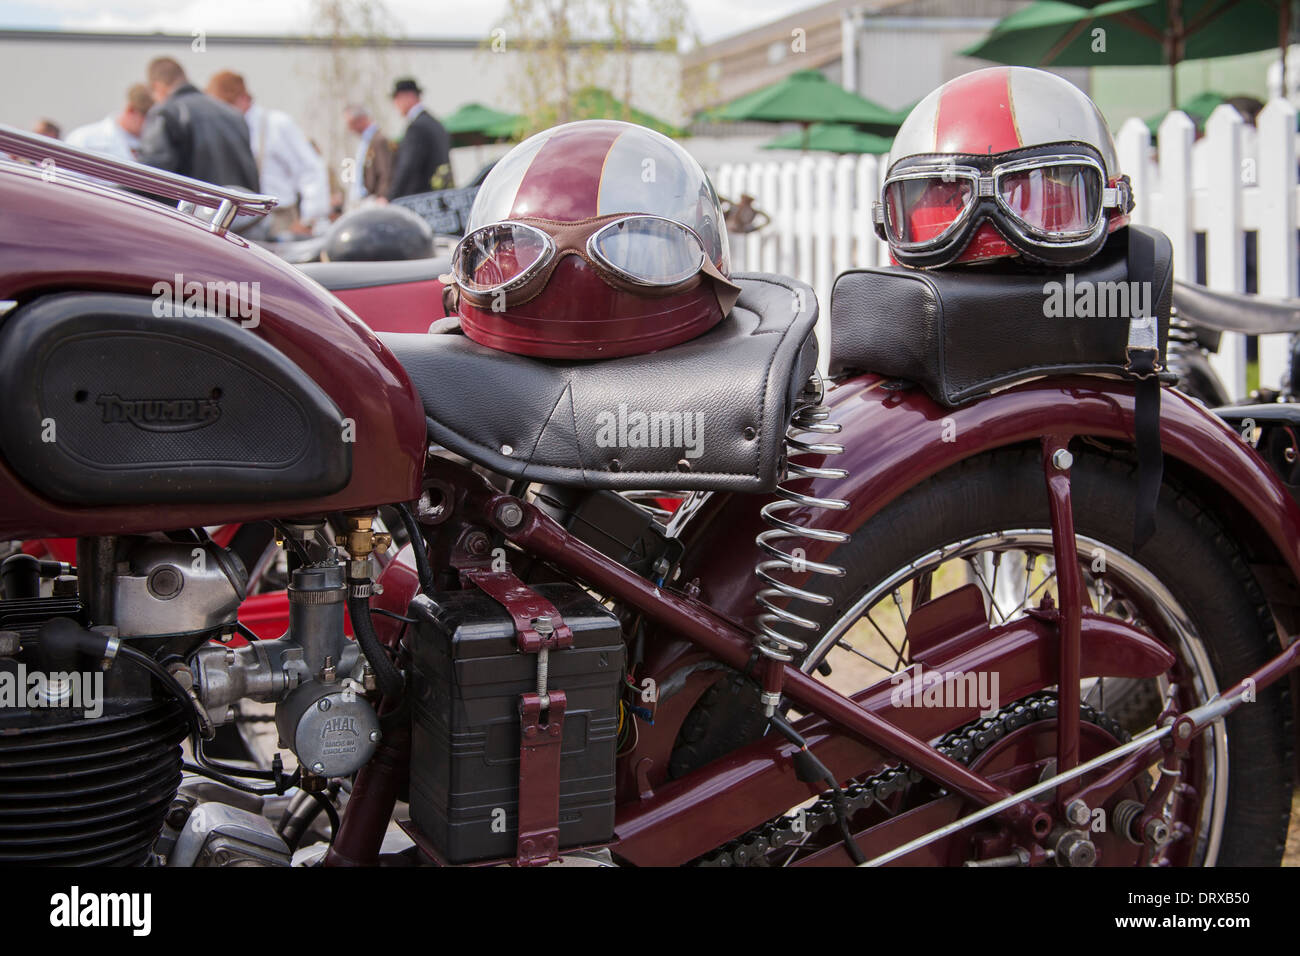 triumph motor bike with vintage helmets Stock Photo - Alamy